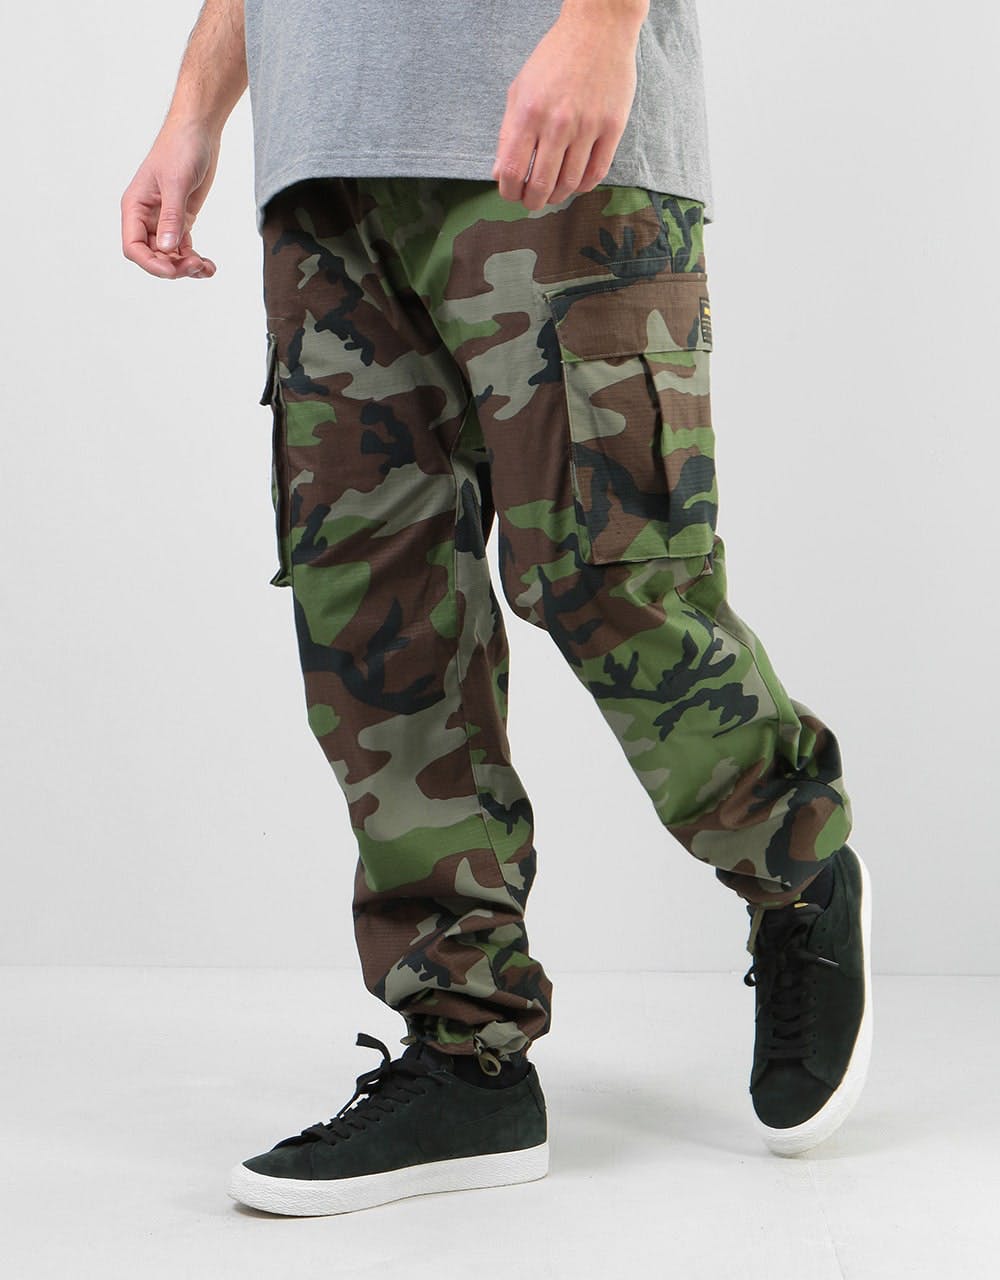 Nike SB FTM Flex Cargo Pants - Medium Olive